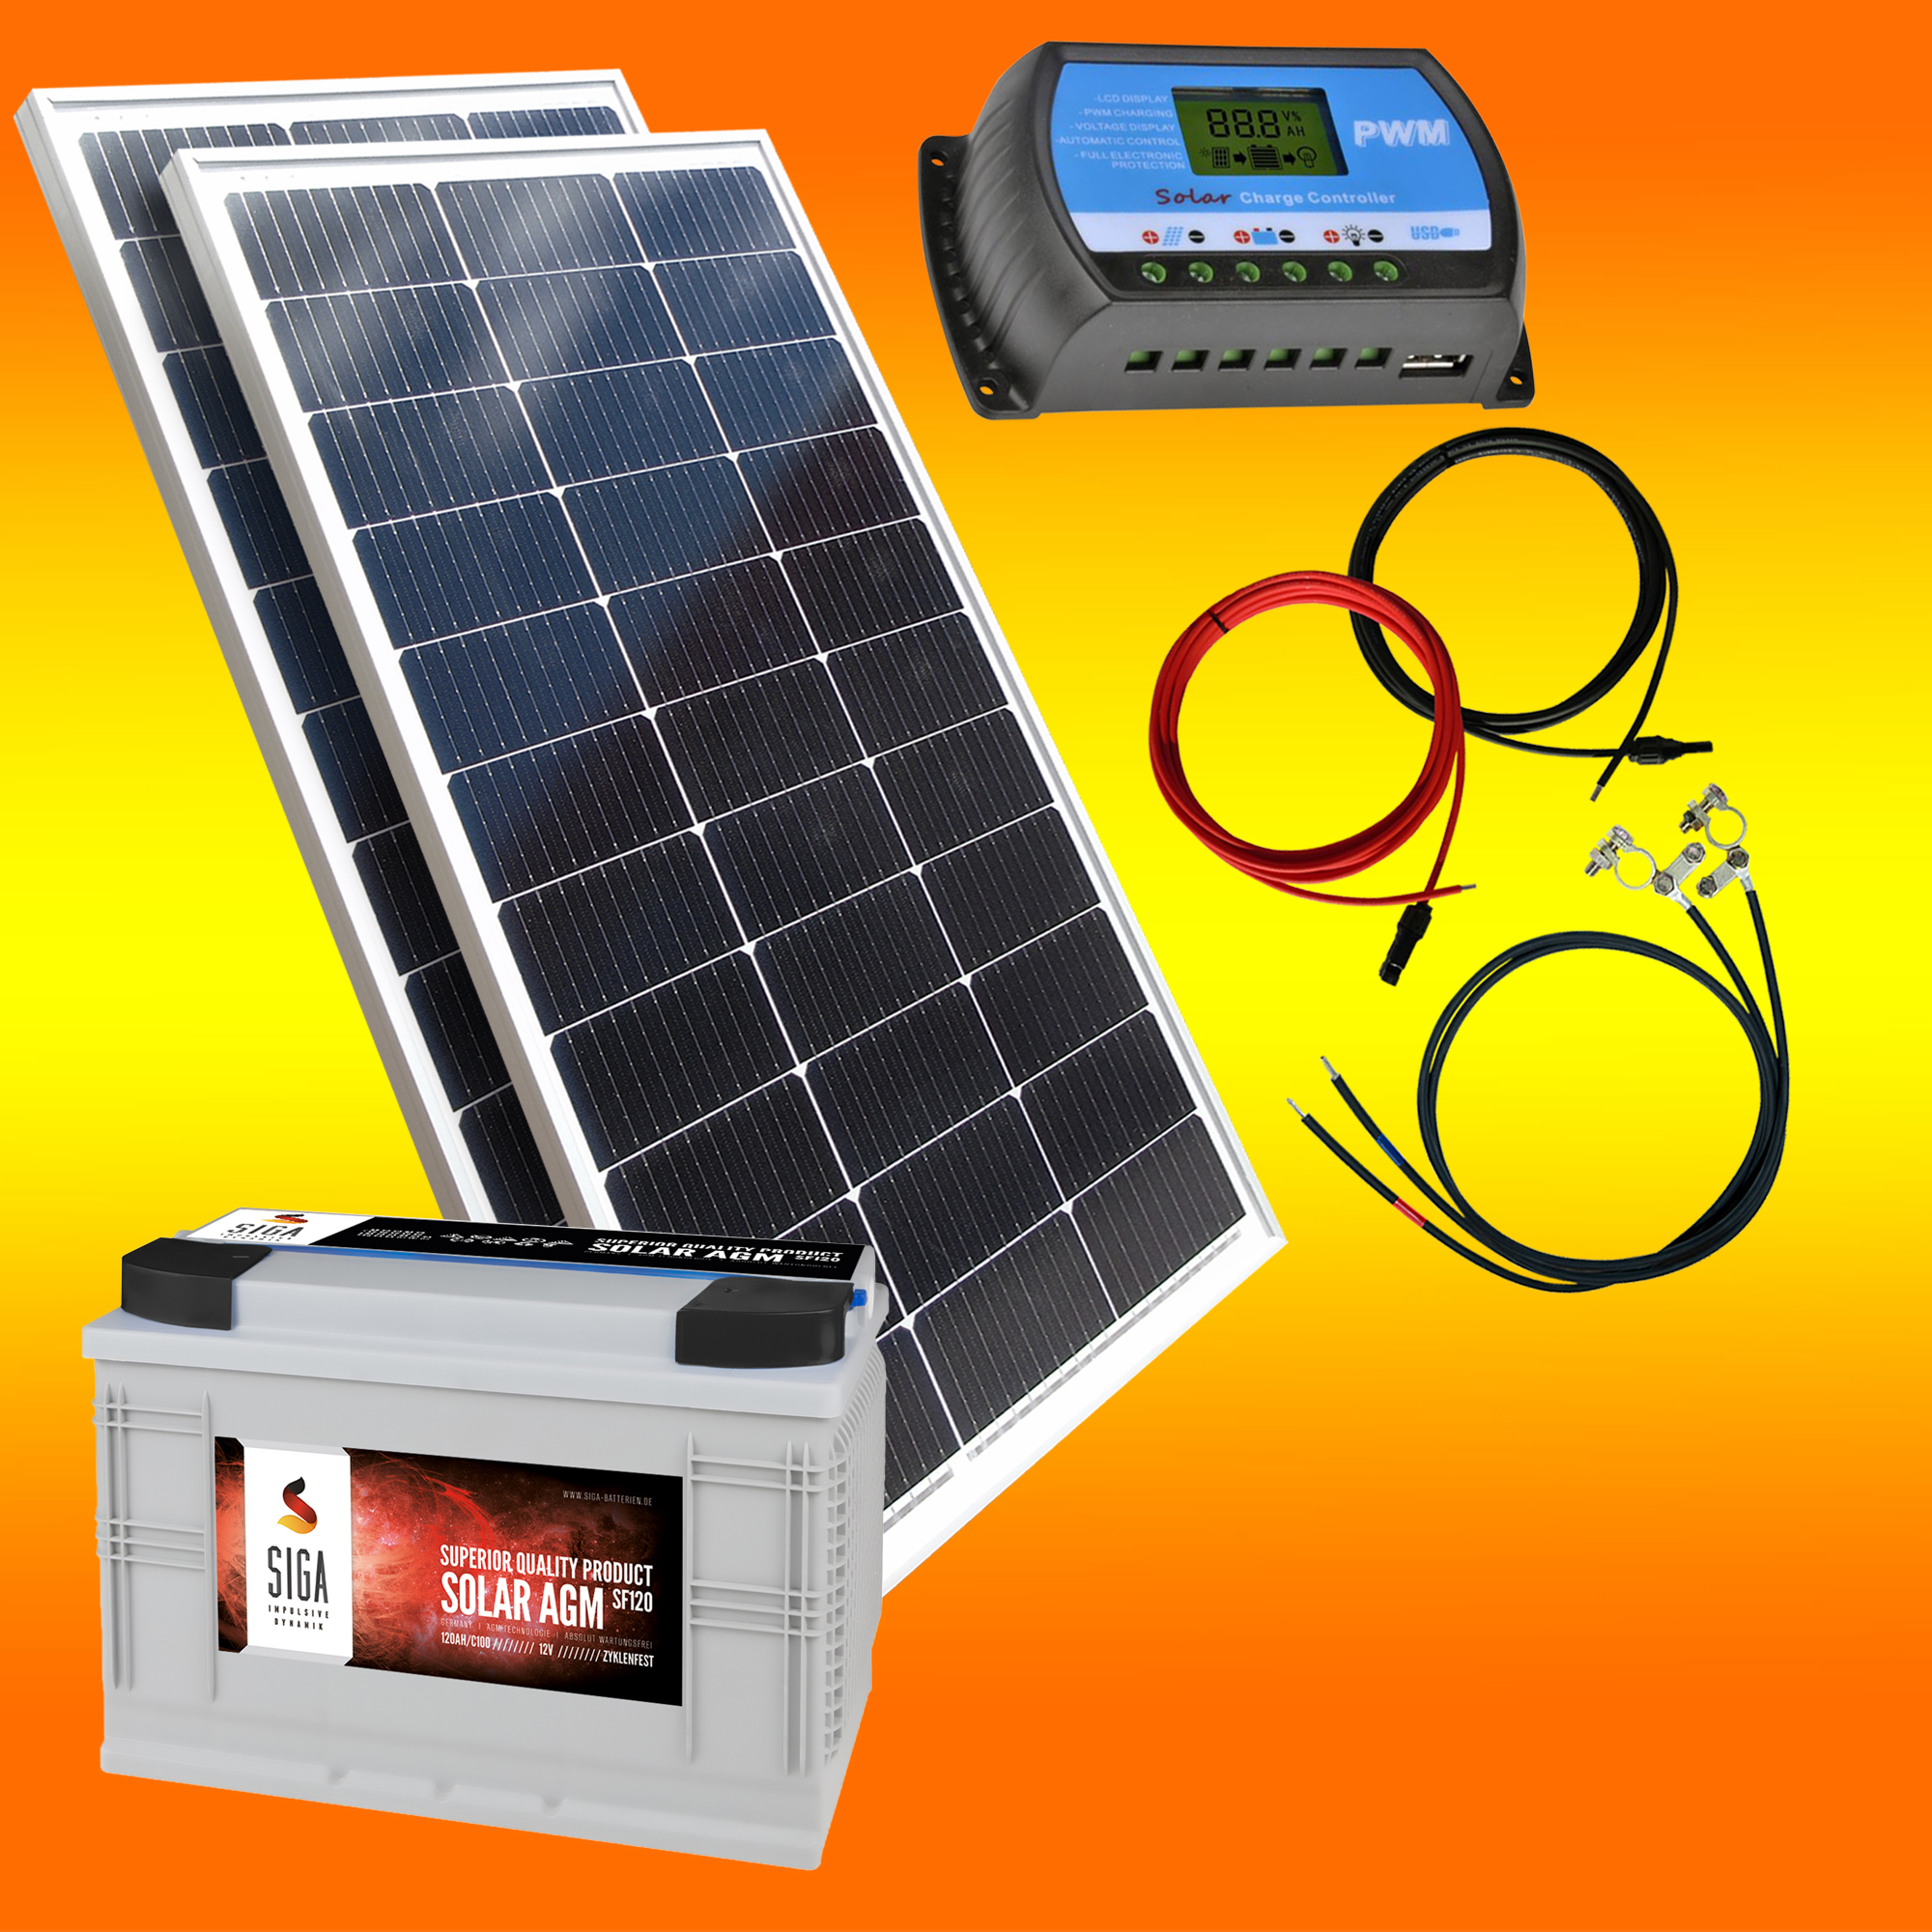 200W Faltbar Tragbar SolarPanel + 12V 20A Batterie Ladegerät Camping  Wohnmobil